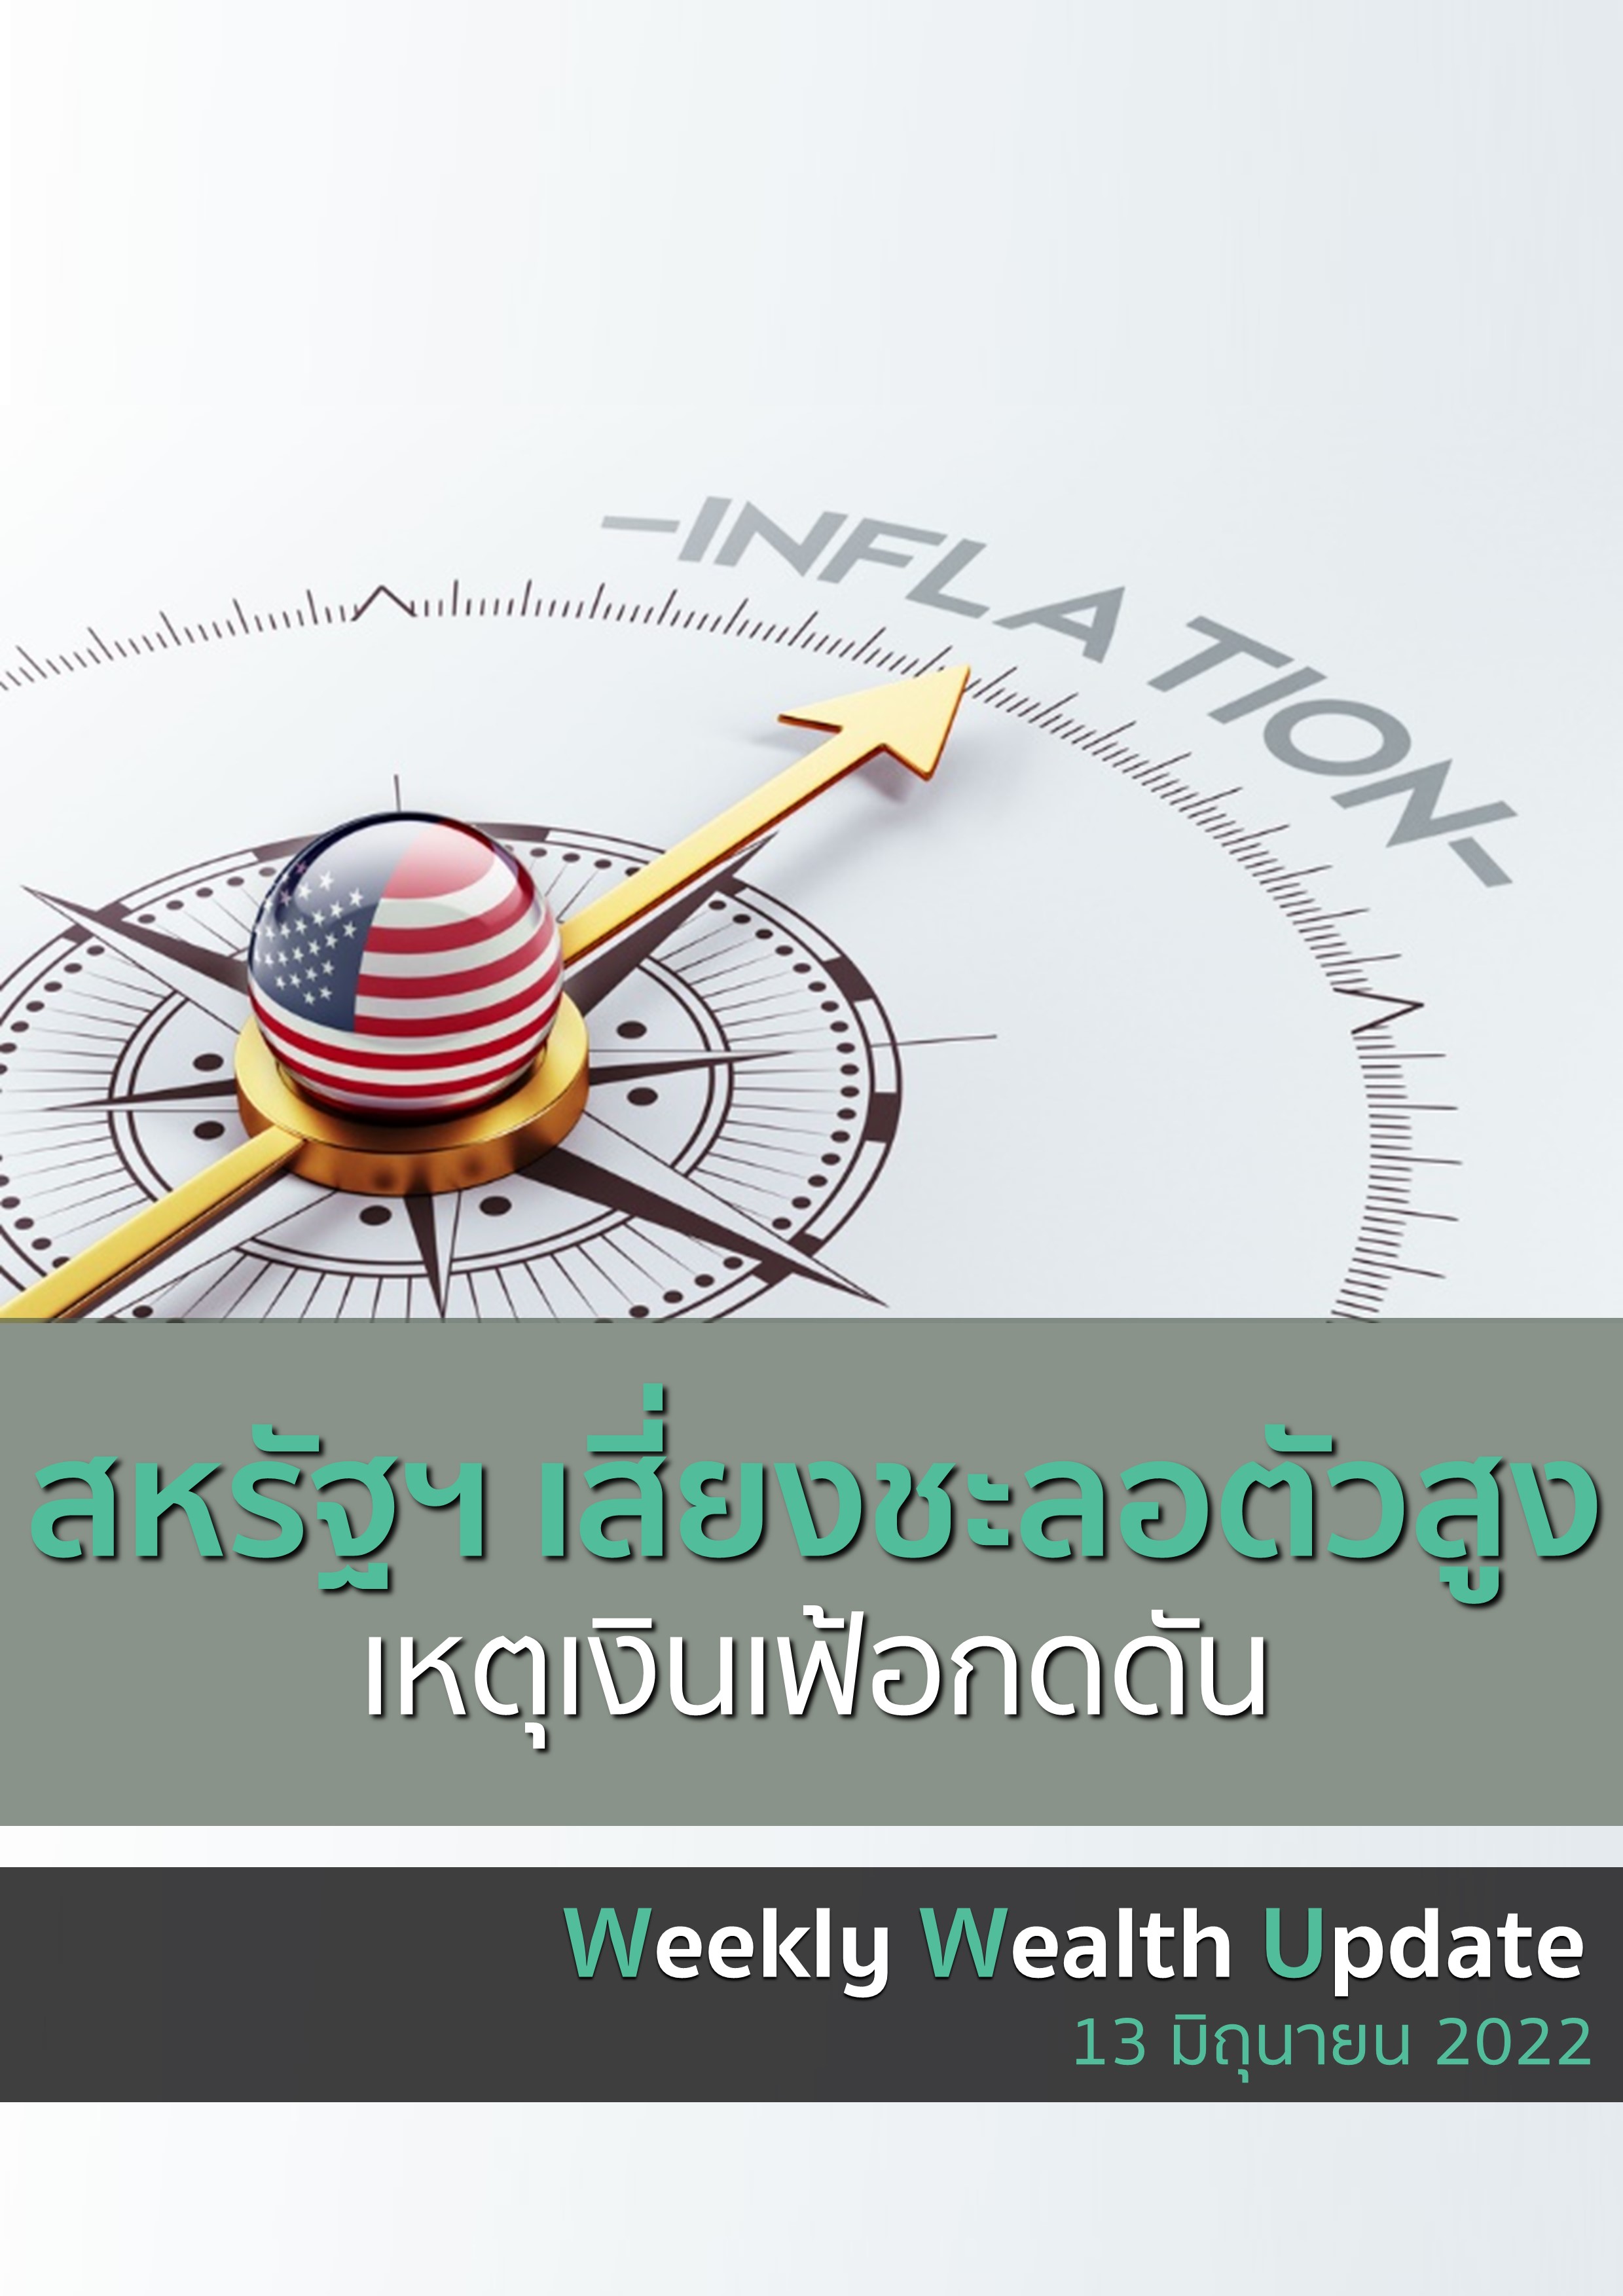 https://www.kasikornbank.com/th/k-expert/knowledge/e-magazine/PublishingImages/us-inflation-down-growth.jpg